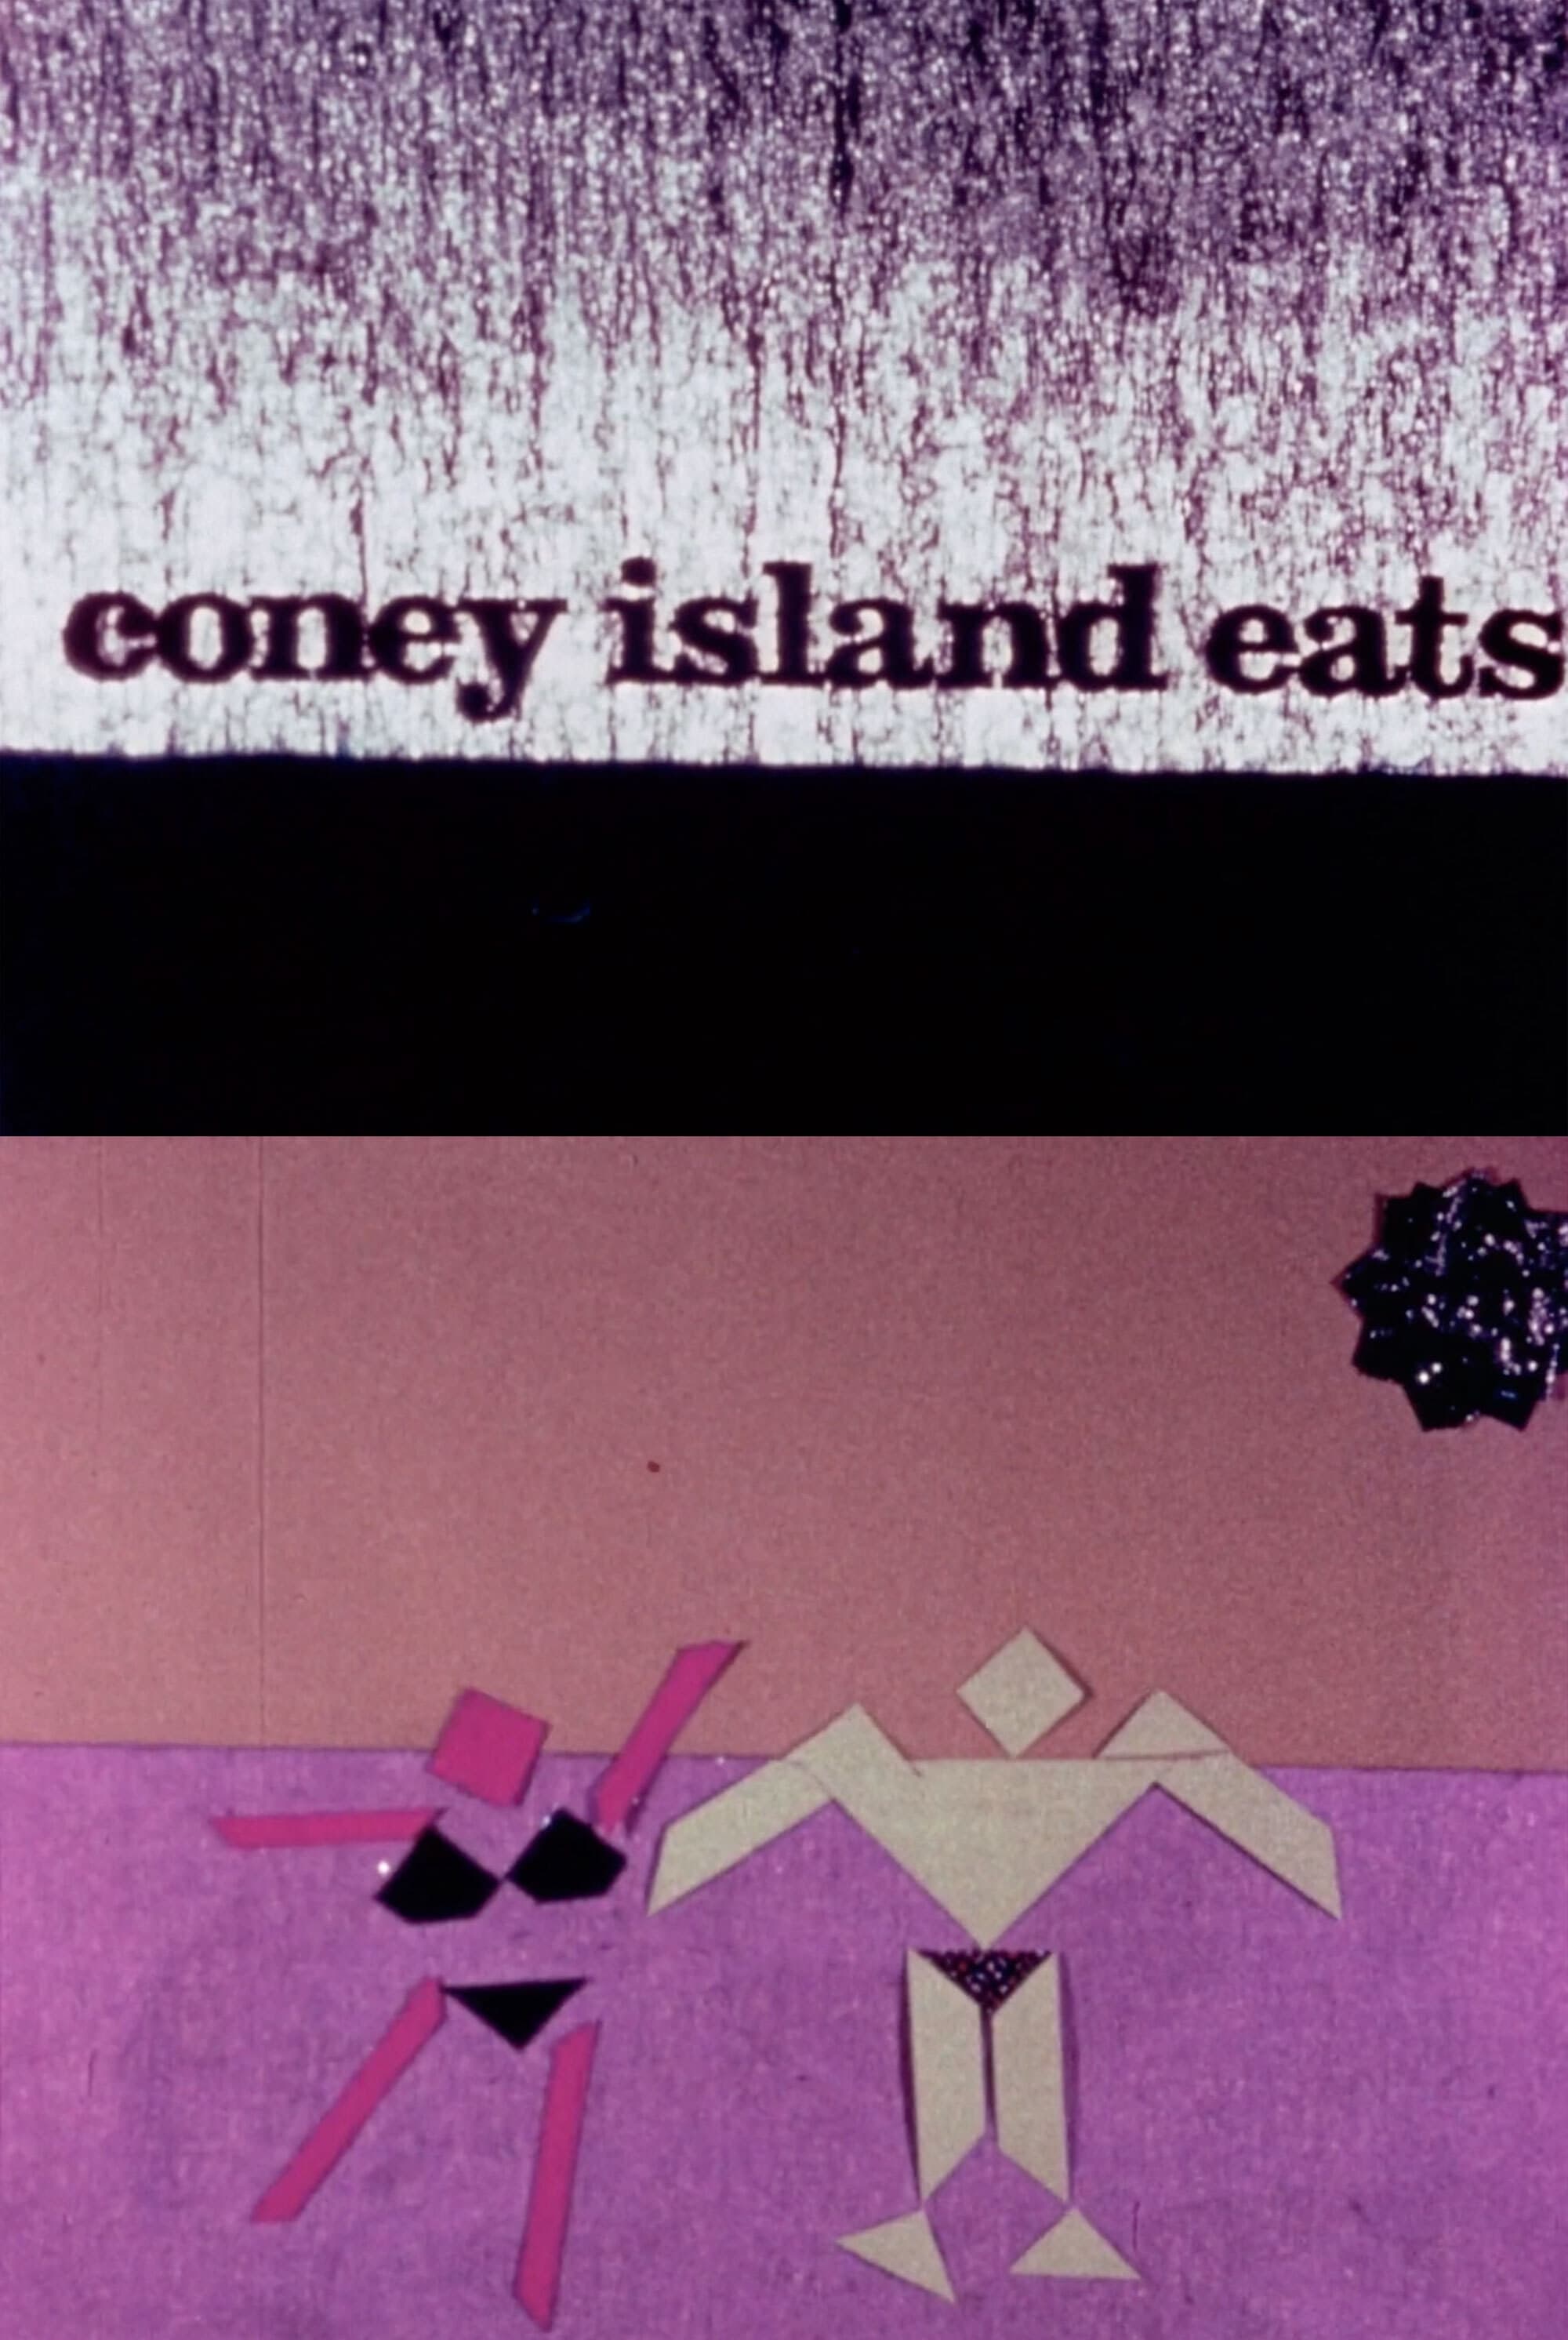 Coney Island Eats